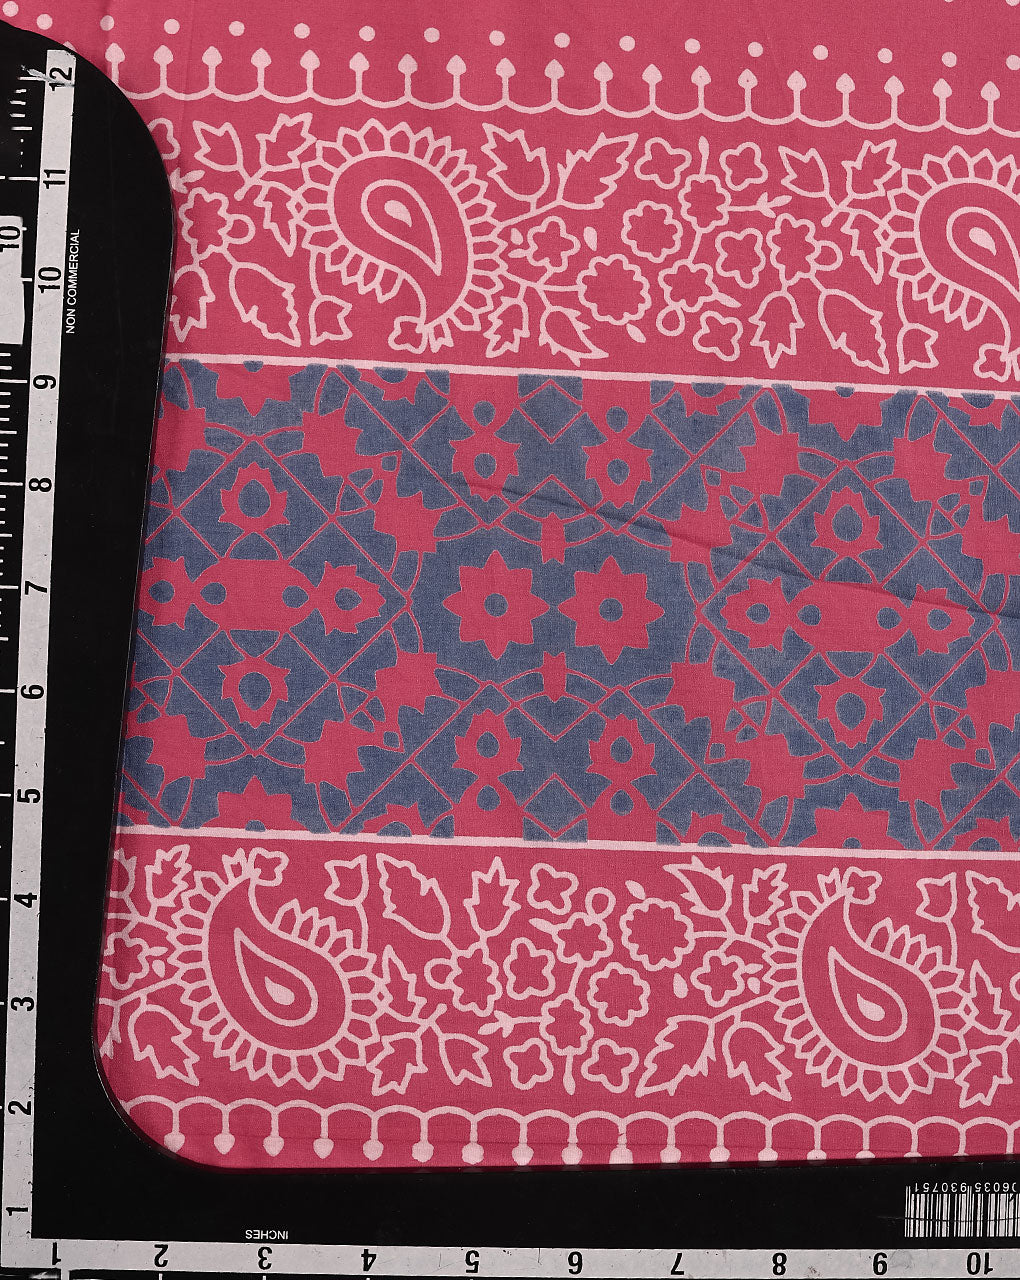 Red Polka Dots Screen Print Cotton Poplin Fabric ( Width 56 Inch )